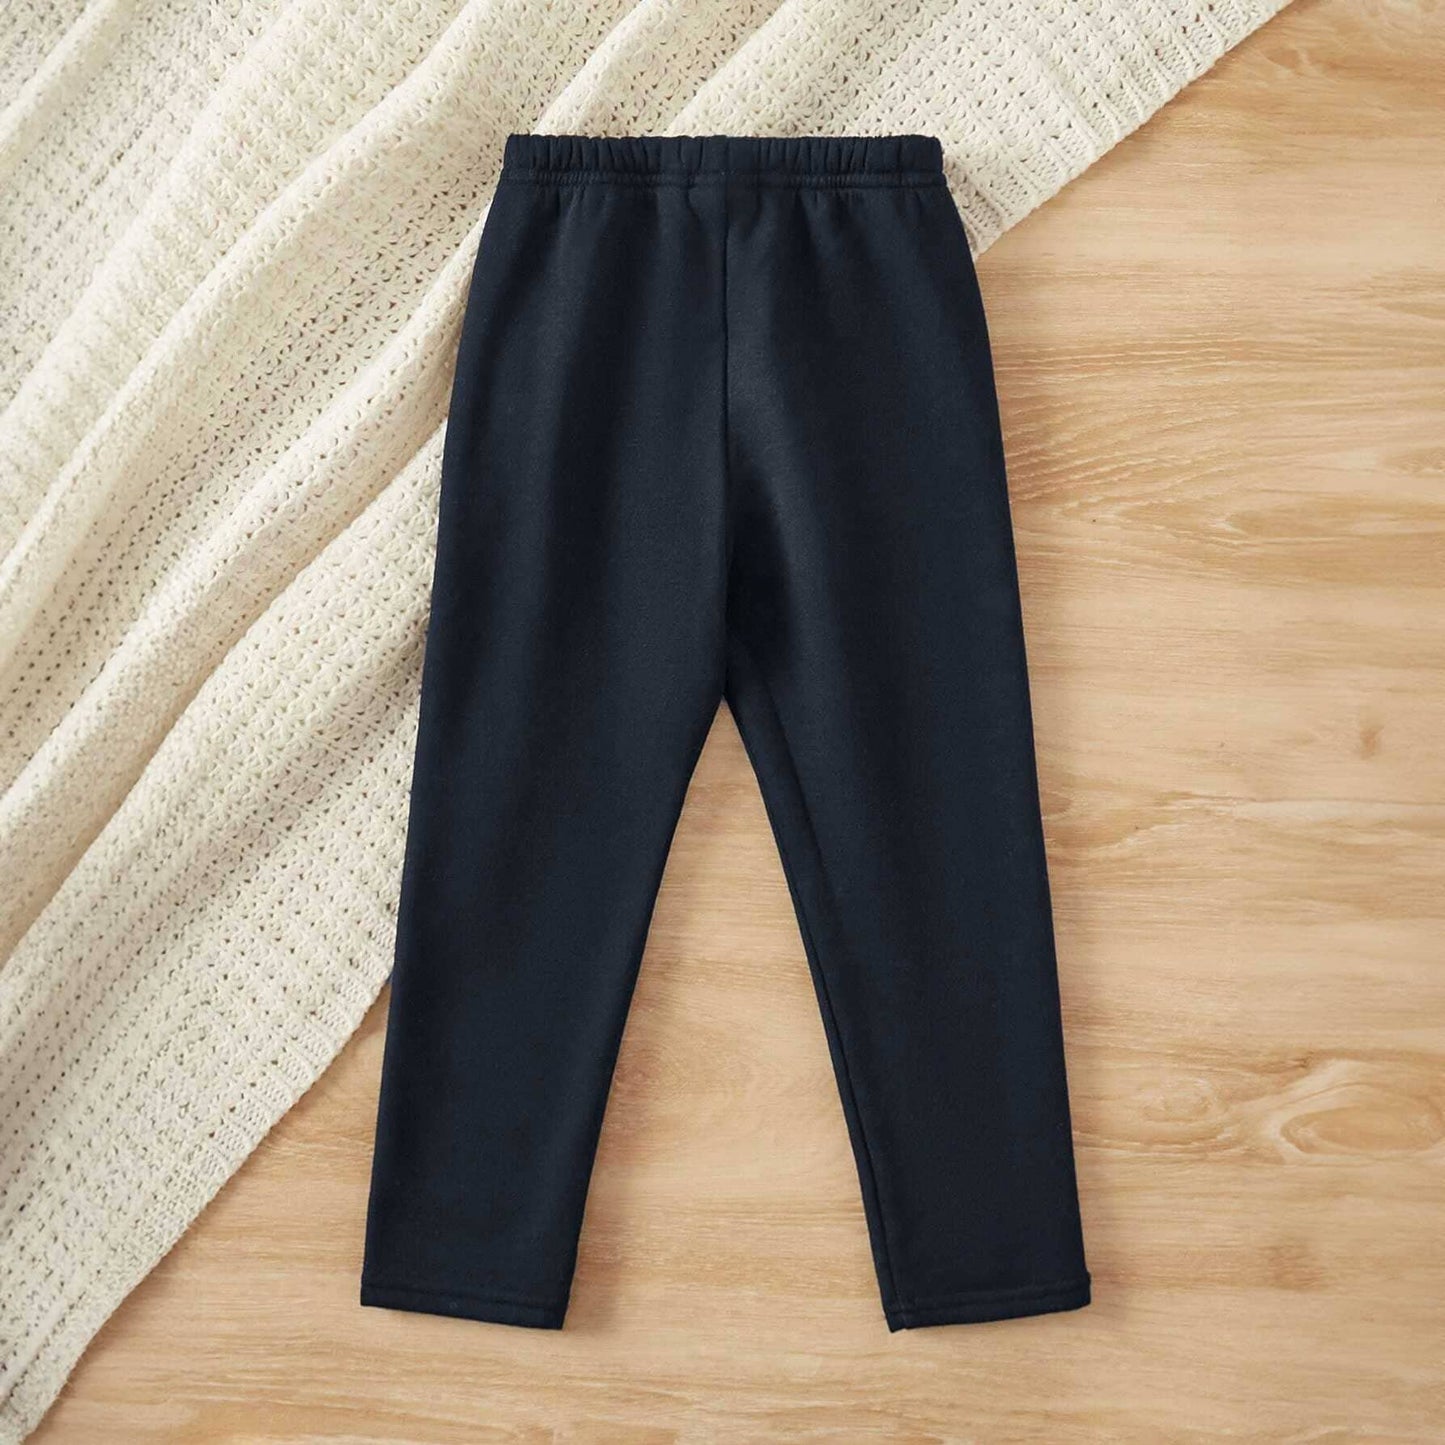 Bunbury Kid's Thermal Base Layer Trousers Boy's Trousers RAM Navy 18 (1-2 Years) 